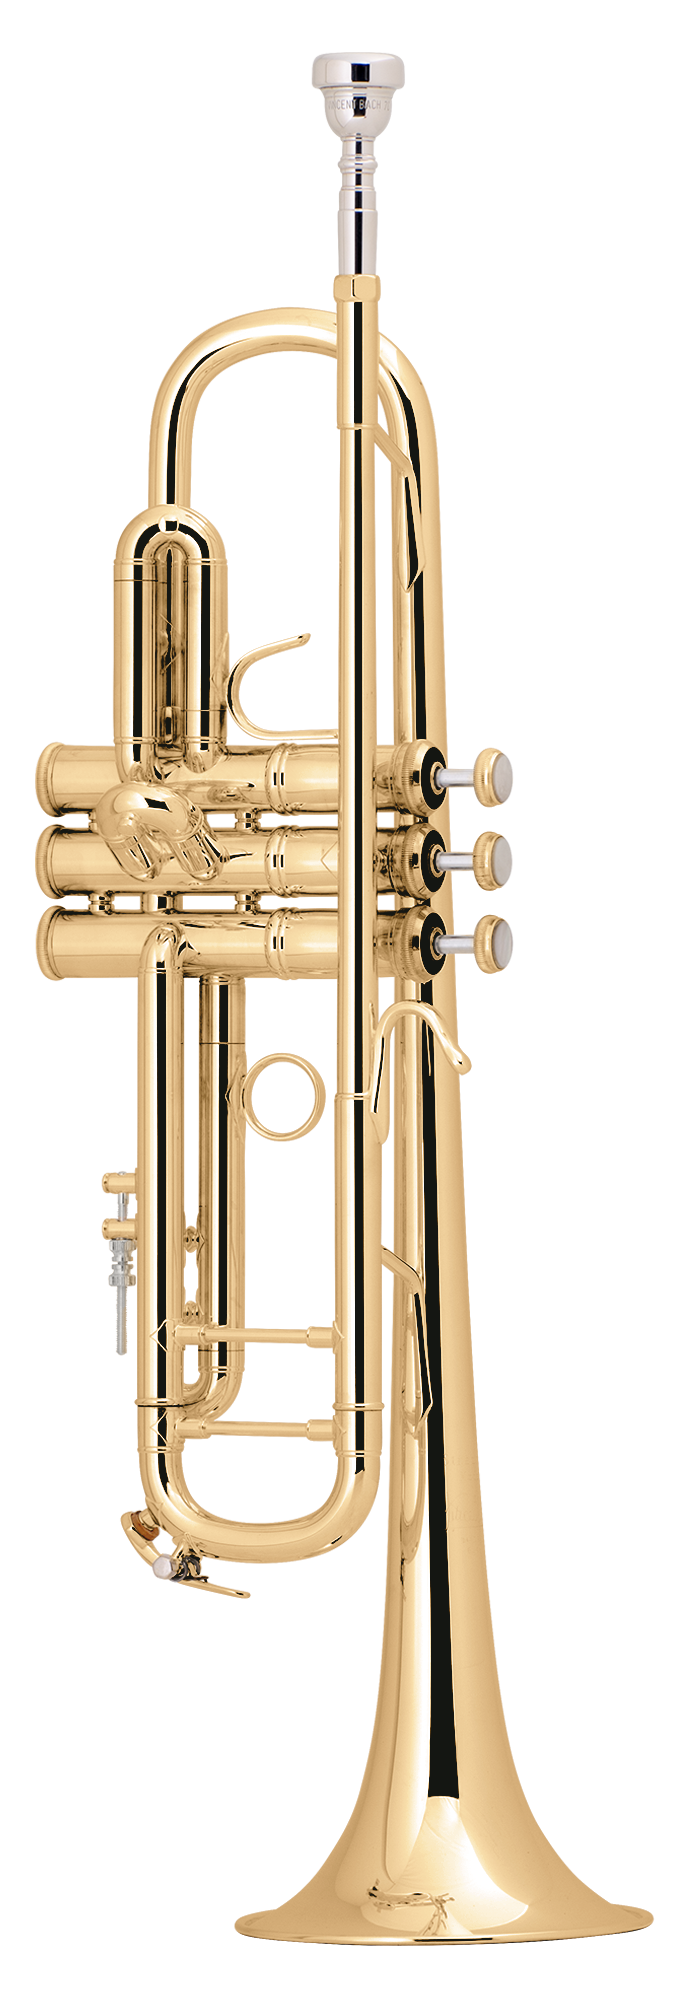 Bach Trumpet Professional Lacquer LT180-72